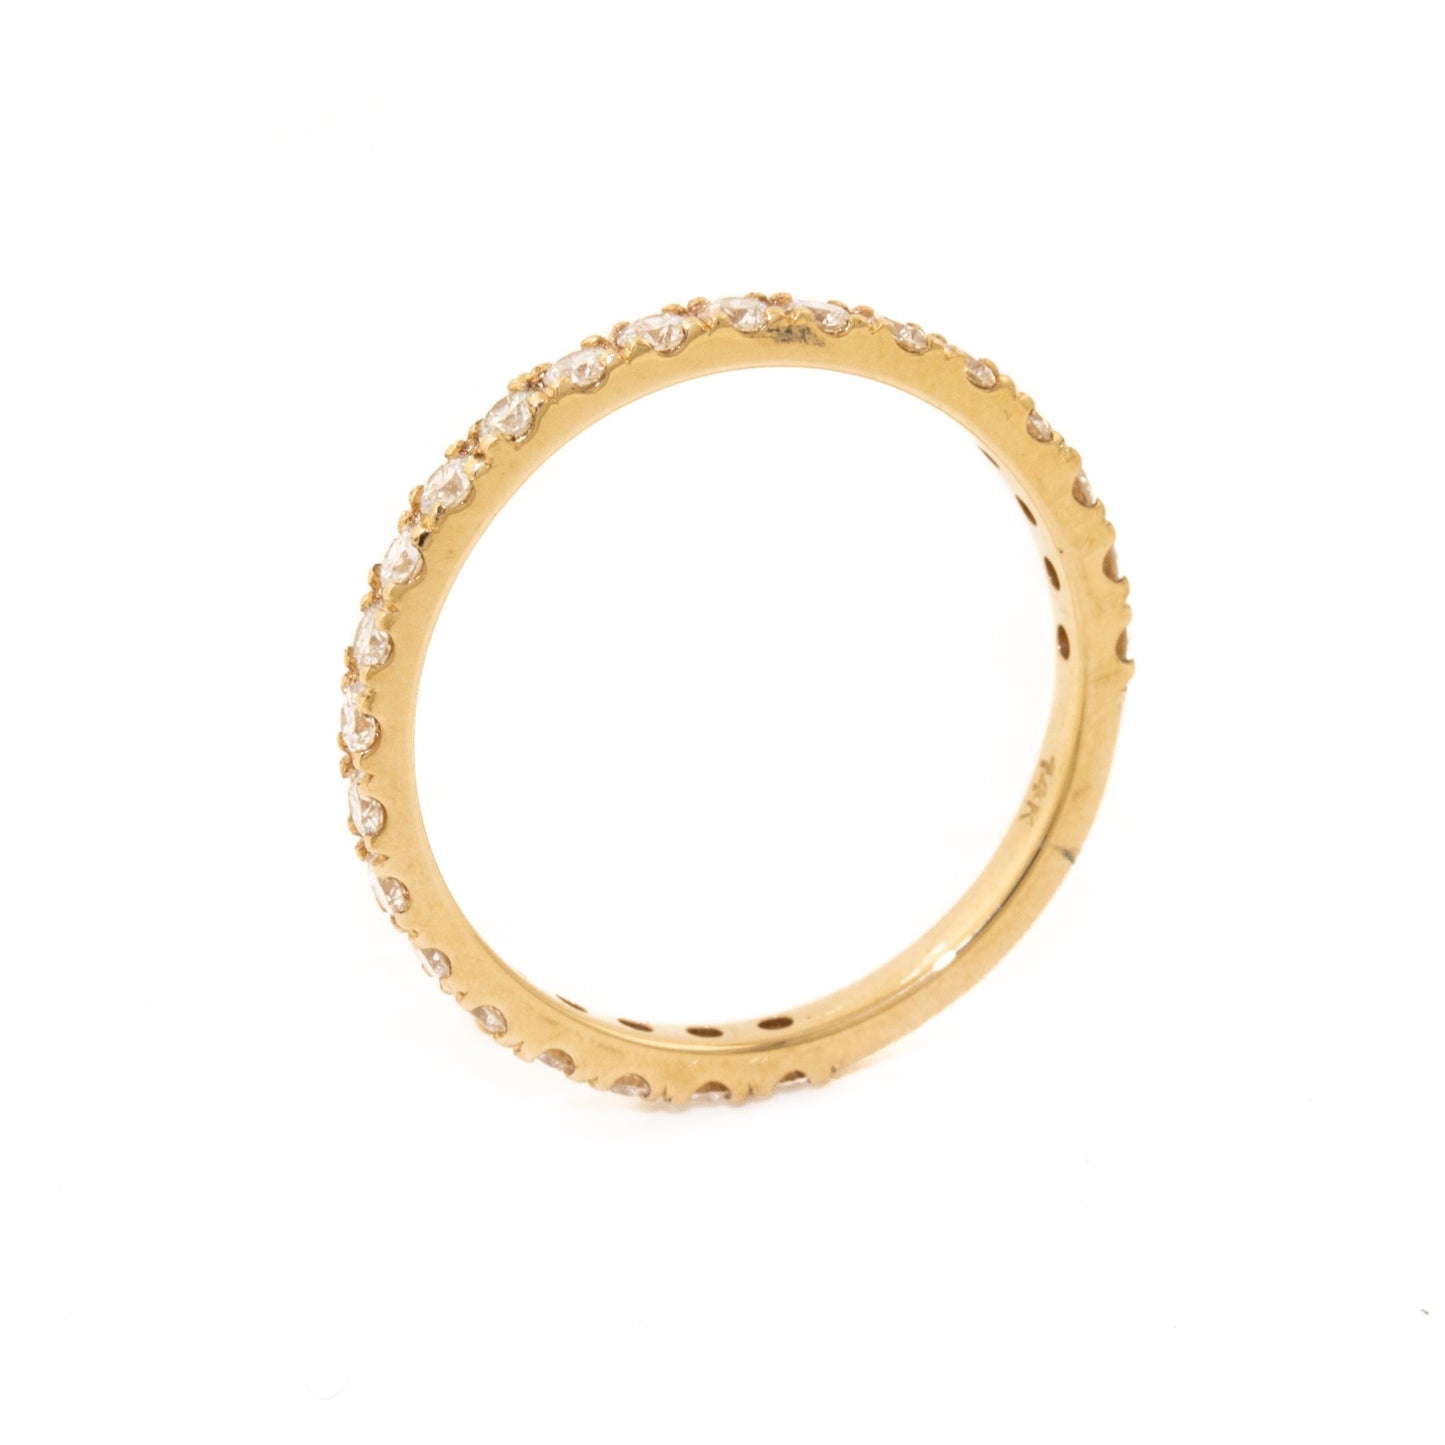 14 KT Gold x Pave Diamond Engagement Band - Kingdom Jewelry